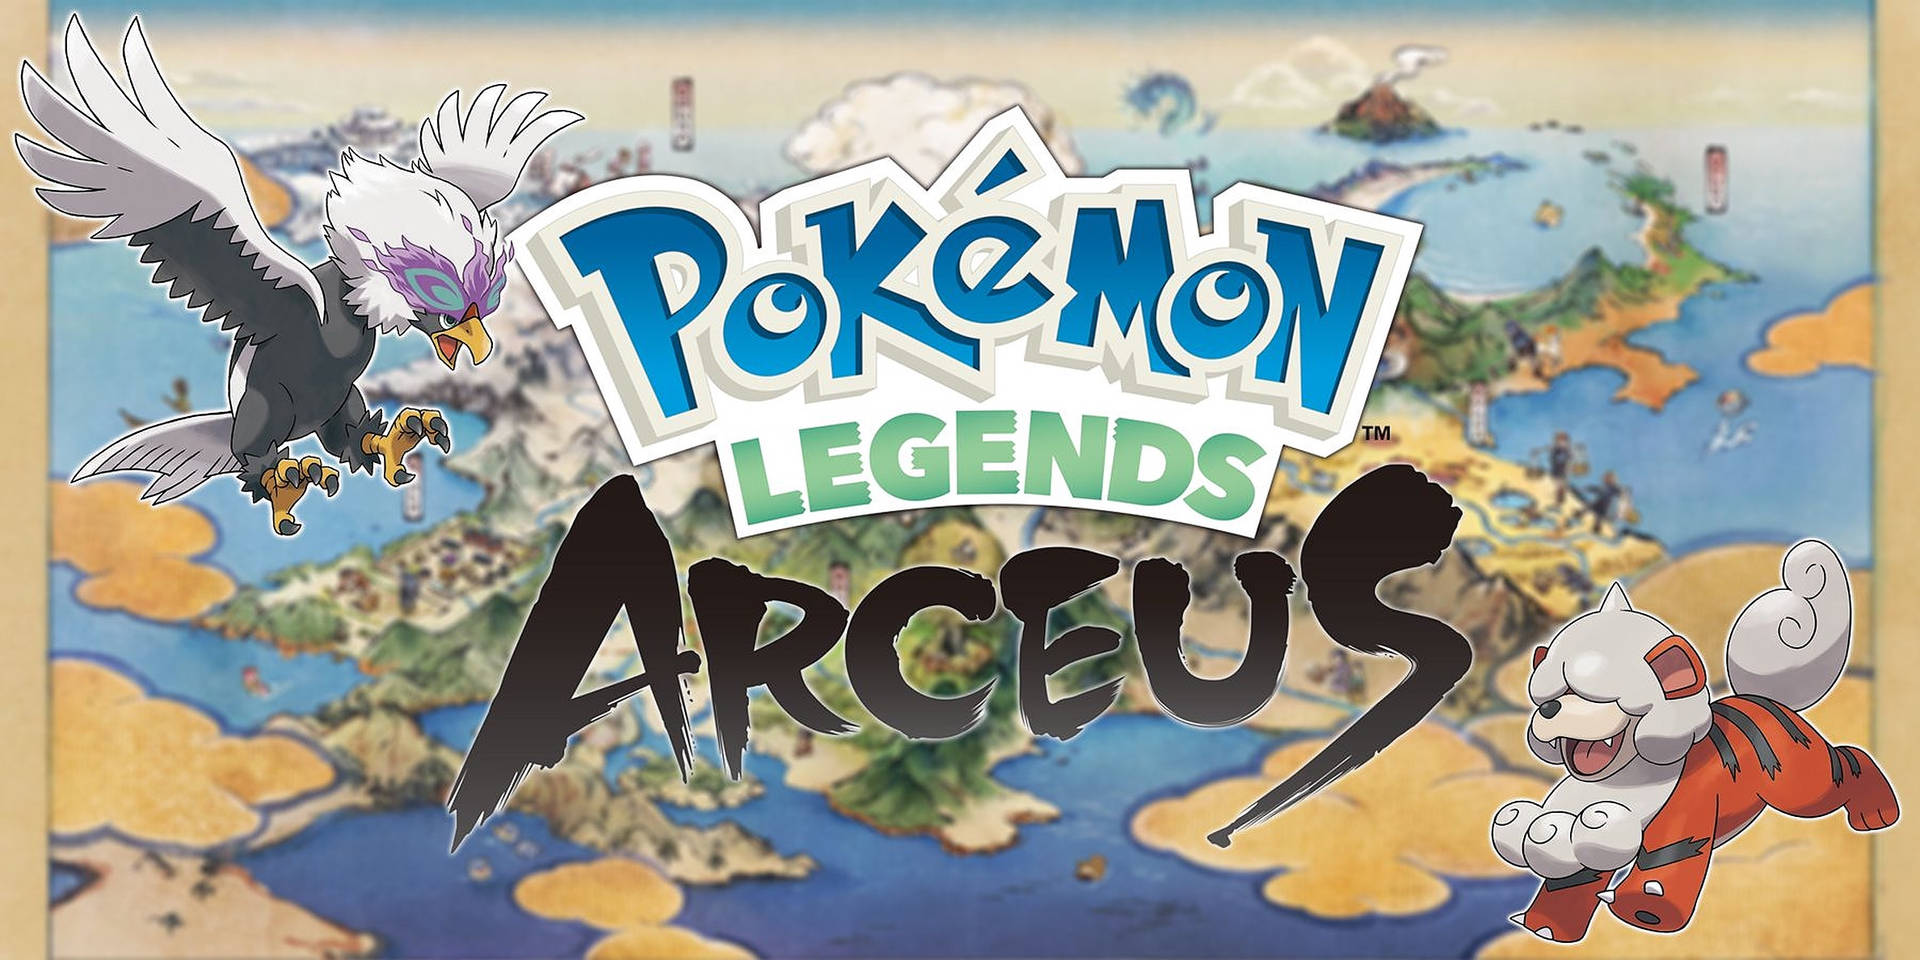 2376X1188 Pokemon Legends Arceus Wallpaper and Background